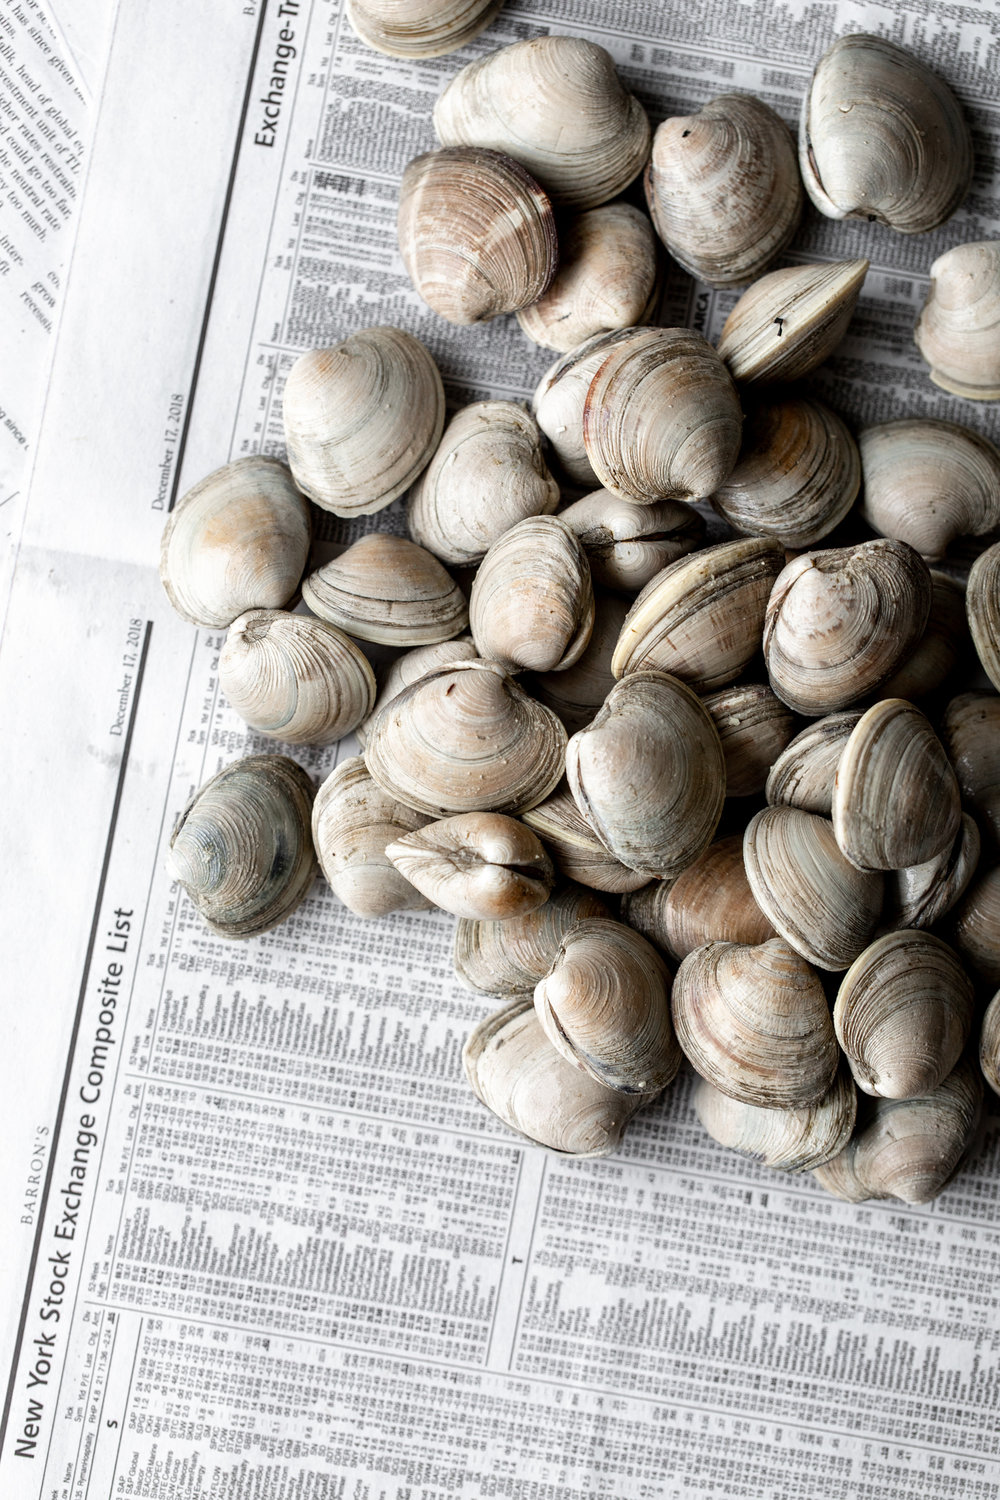 littleneck clams on newspaper